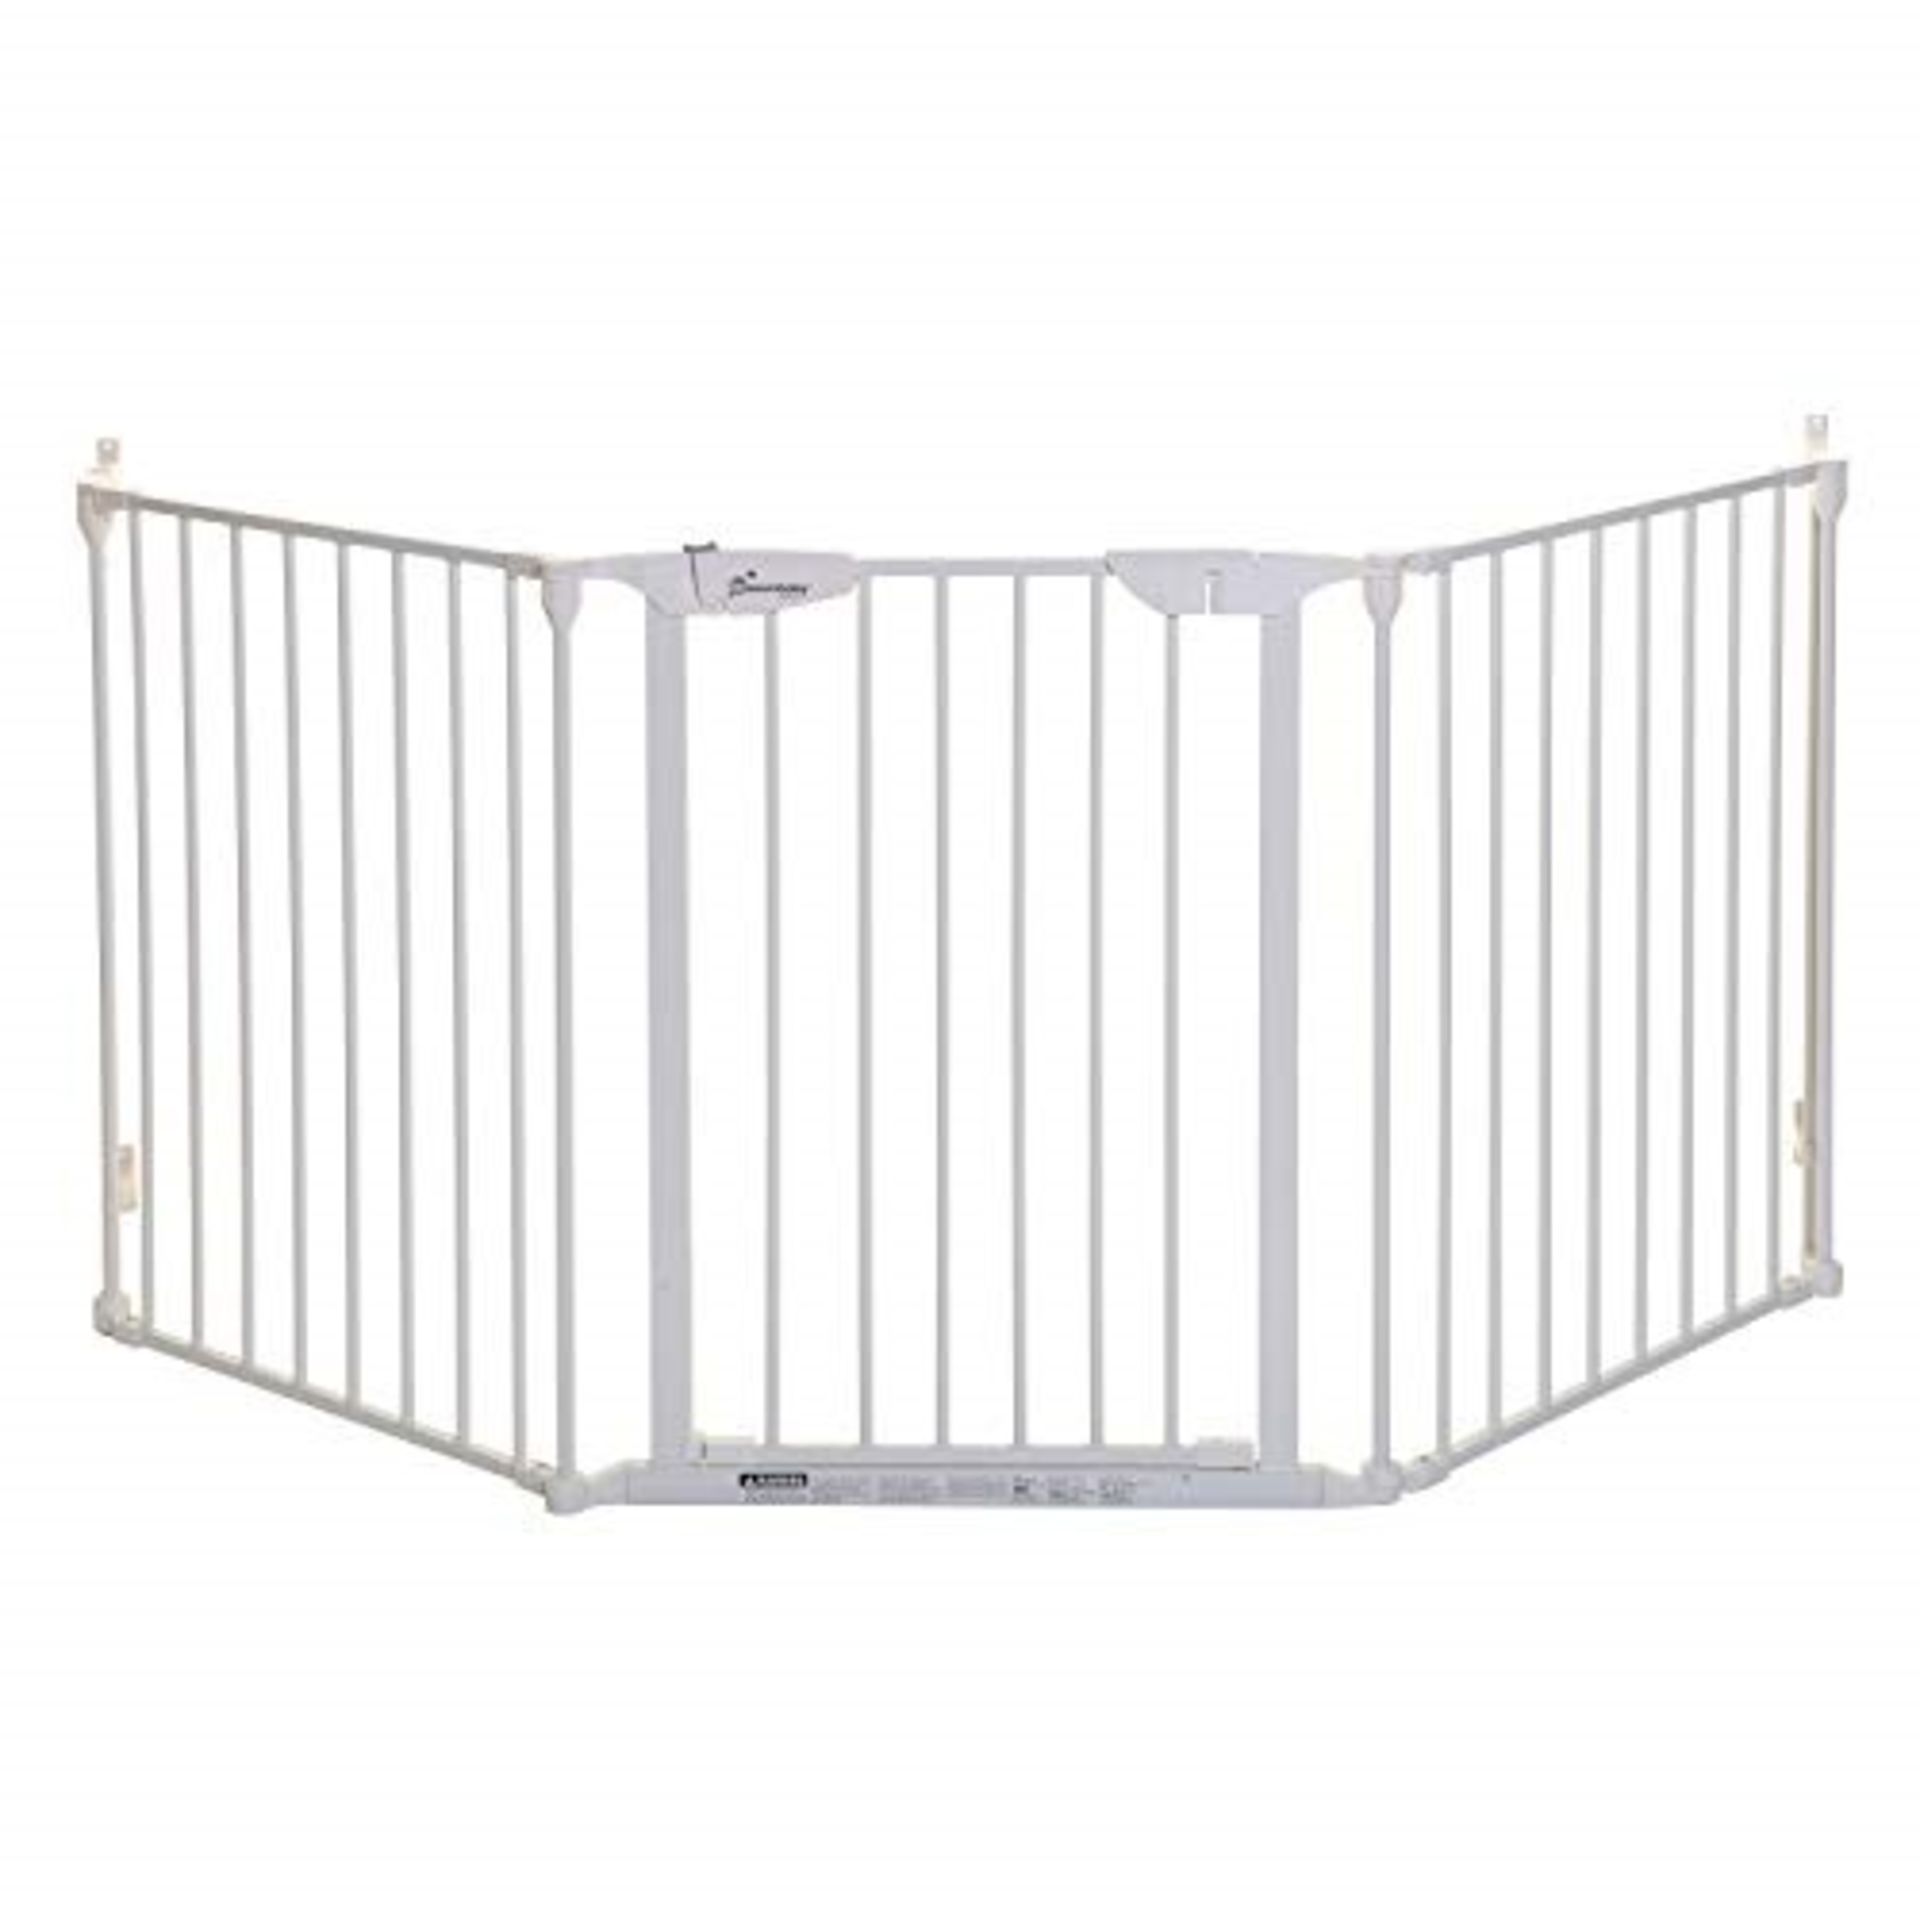 Dreambaby Newport 3 Panel Safety Adapta-Gate (Fits 85.5- 200cm), White